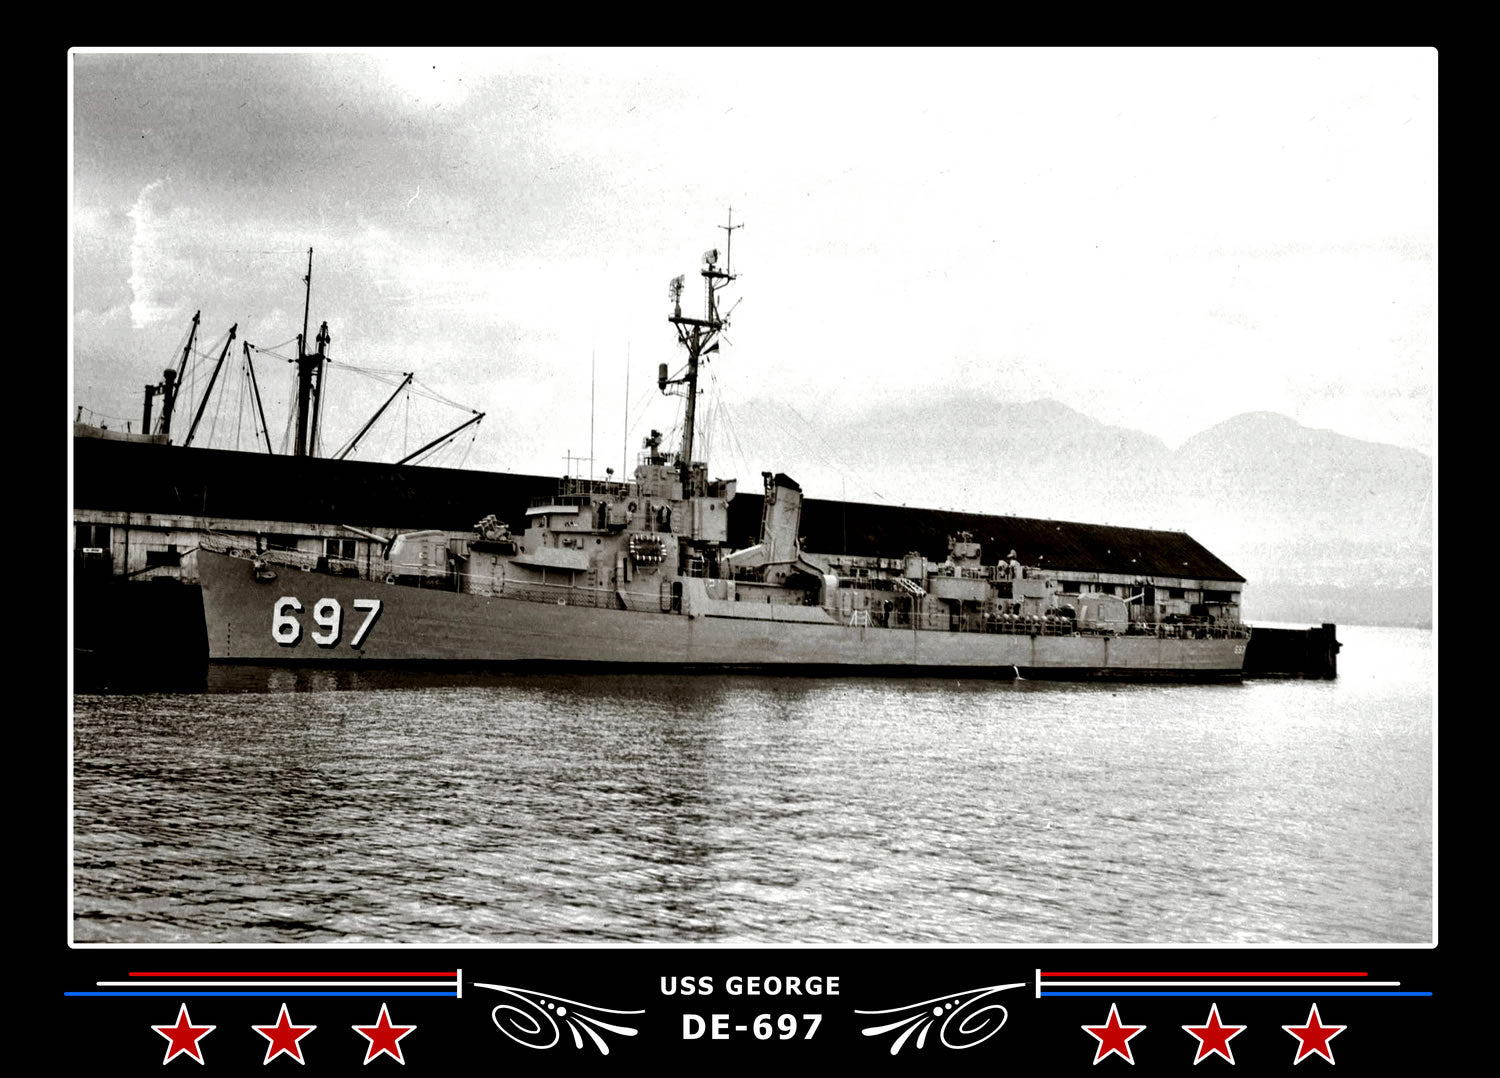 USS George DE-697 Canvas Photo Print